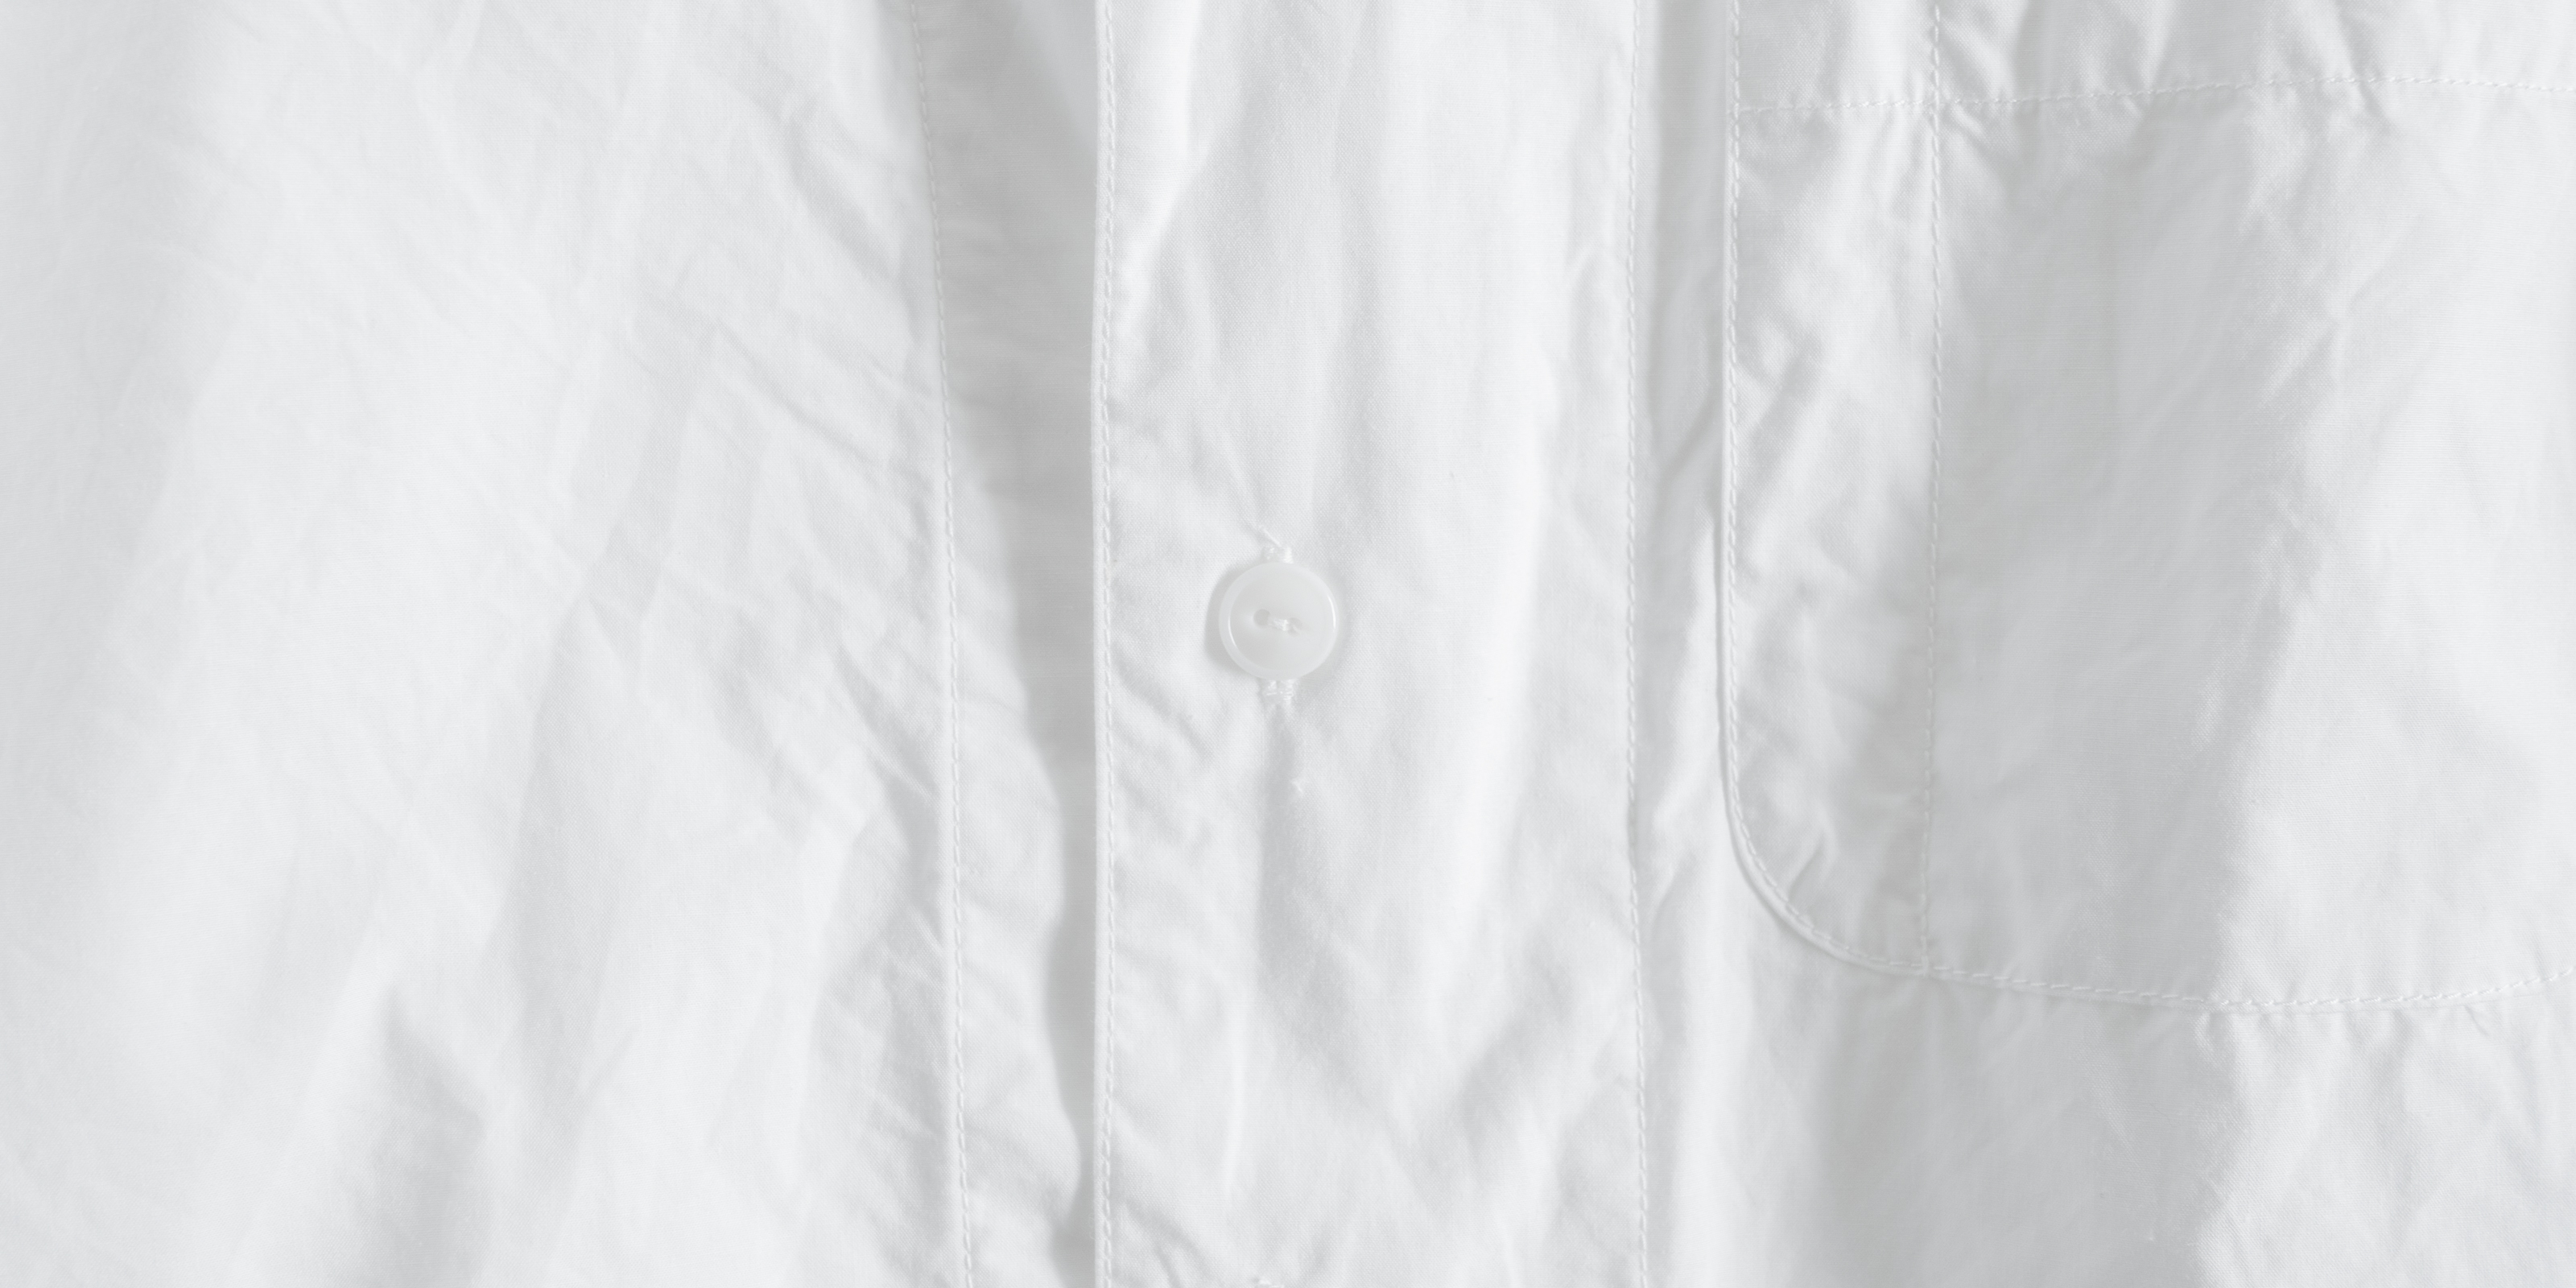 d WEAR バックポケットシャツ・ホワイト・XL